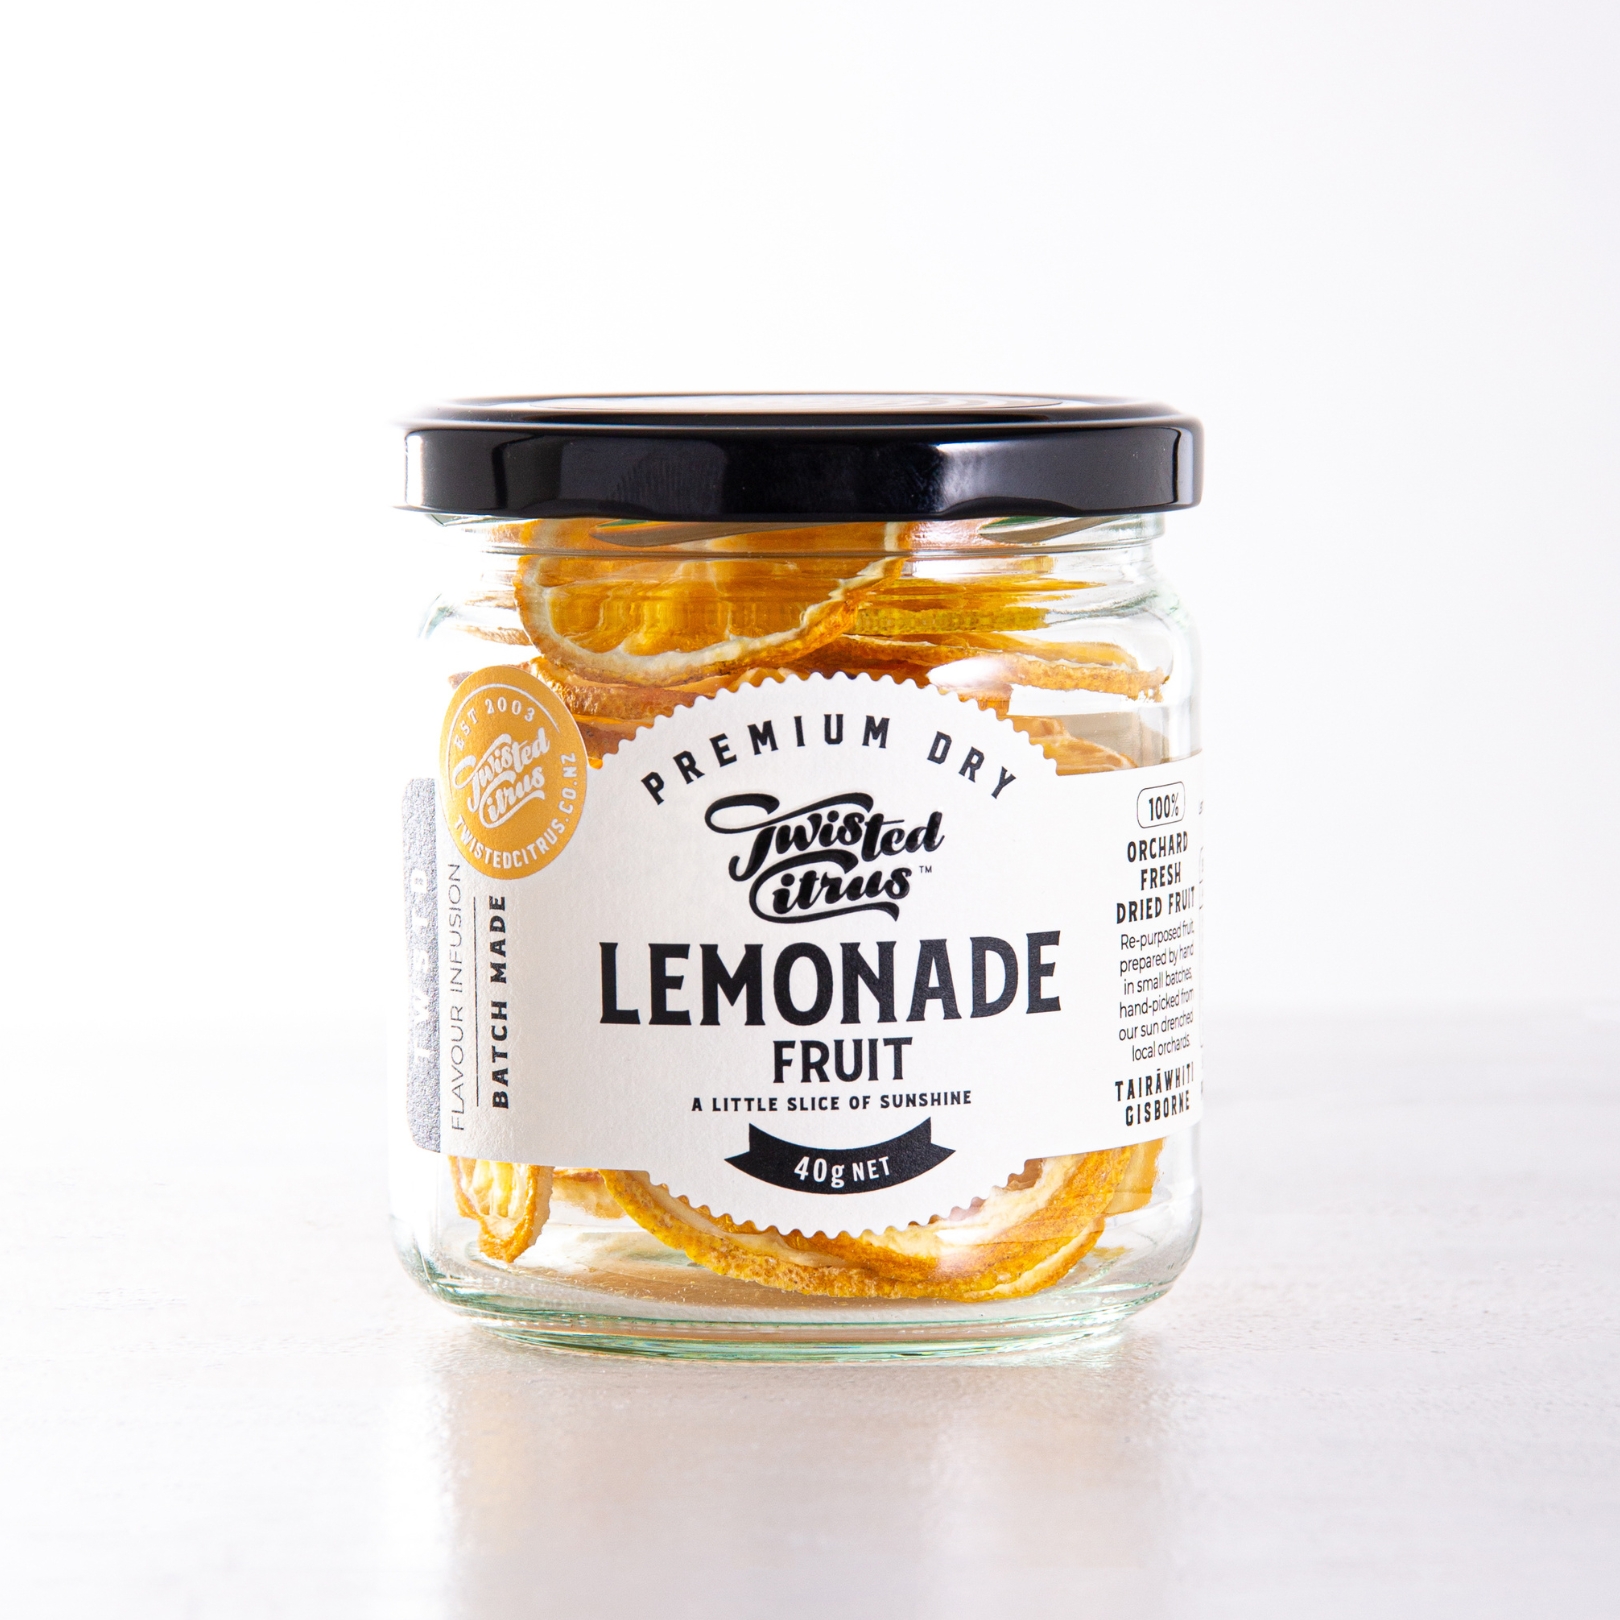 Buy Twisted Dried Fruit - Lemonade Fruit Online NZ